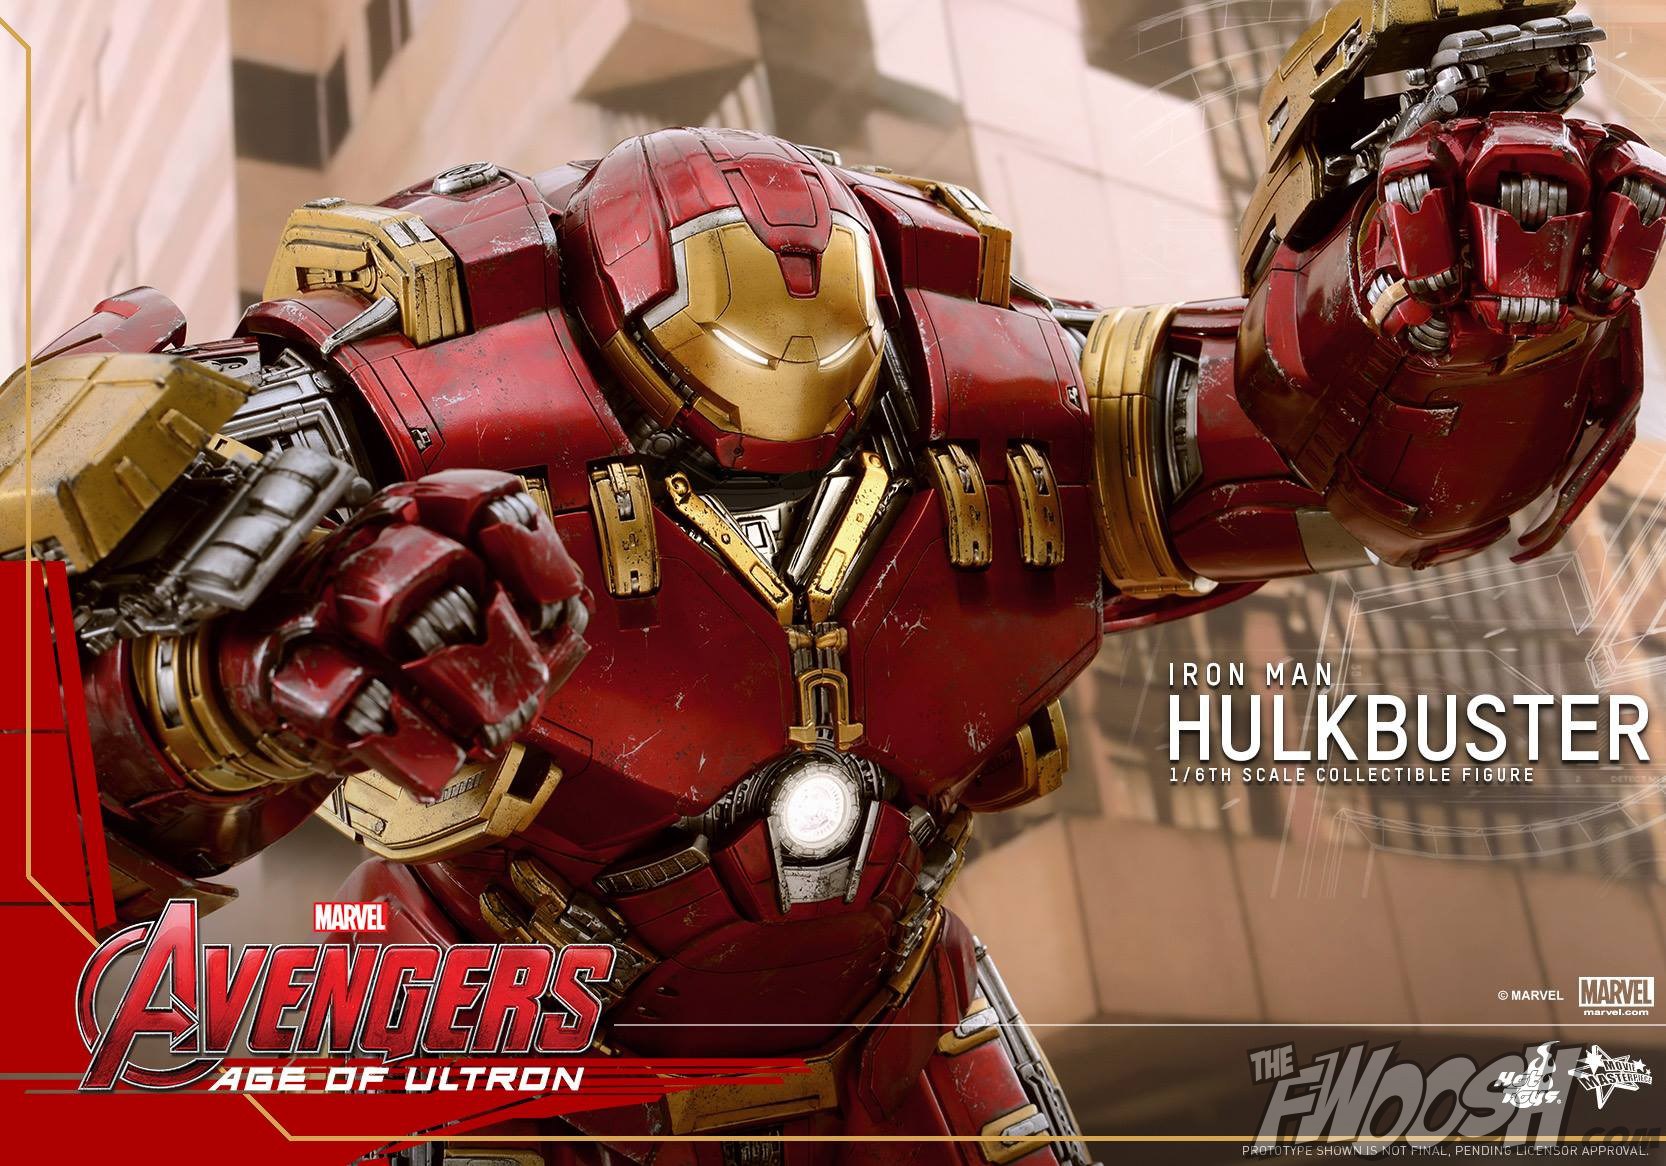 Age Of Ultron Avengers Iron Man Hulkbuster Wallpaper